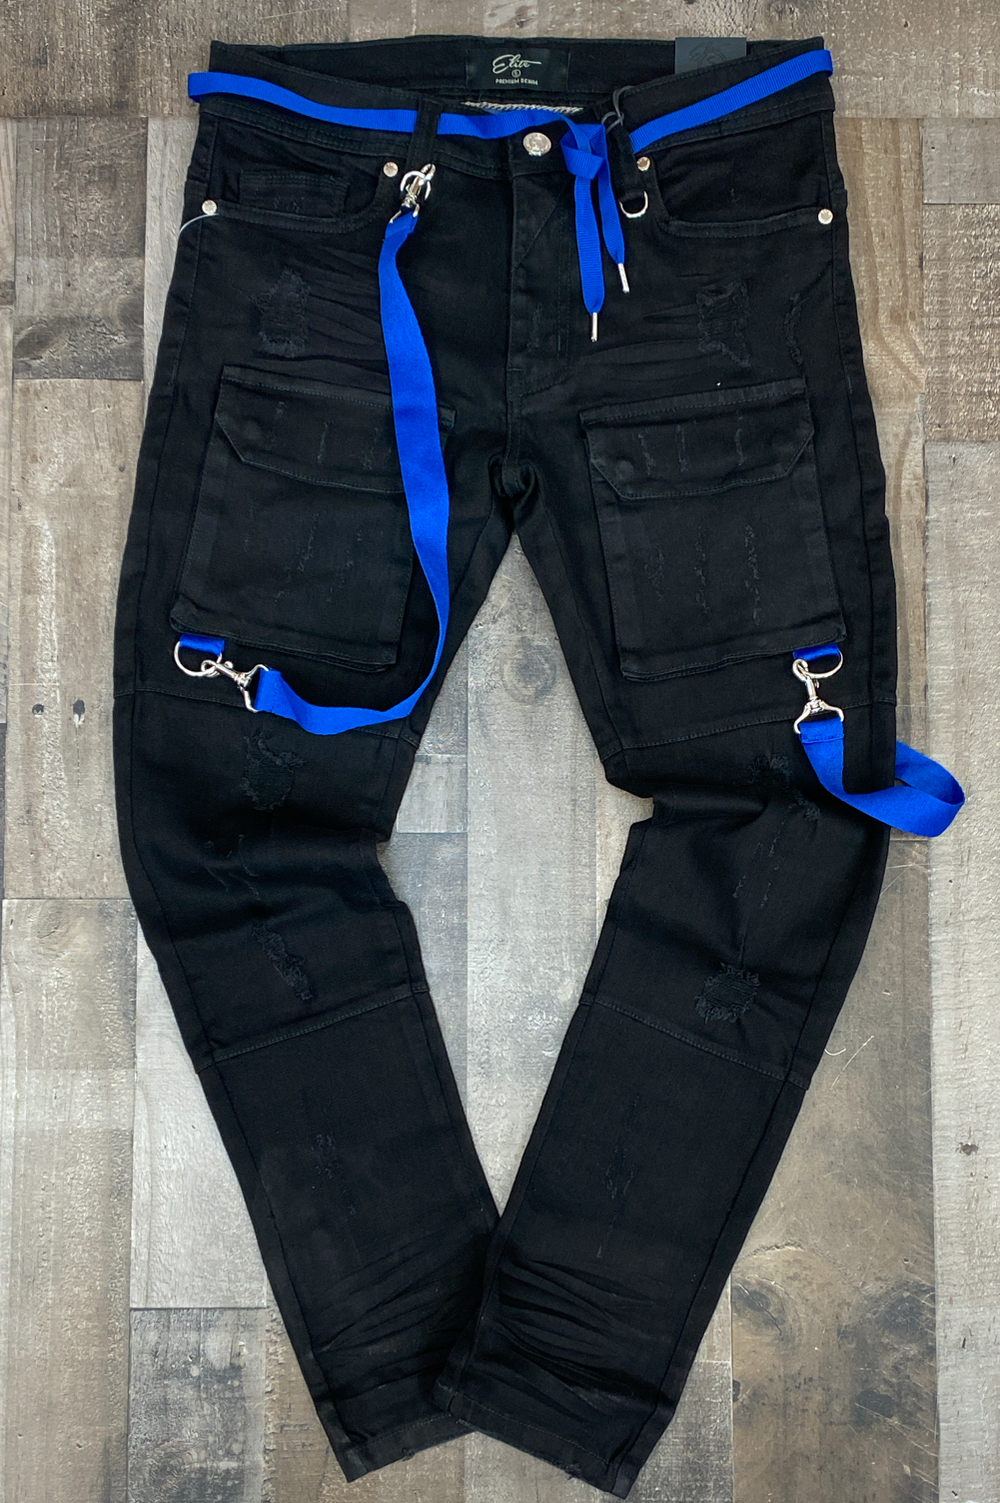 Elite- men’s cargo jeans (black/blue)